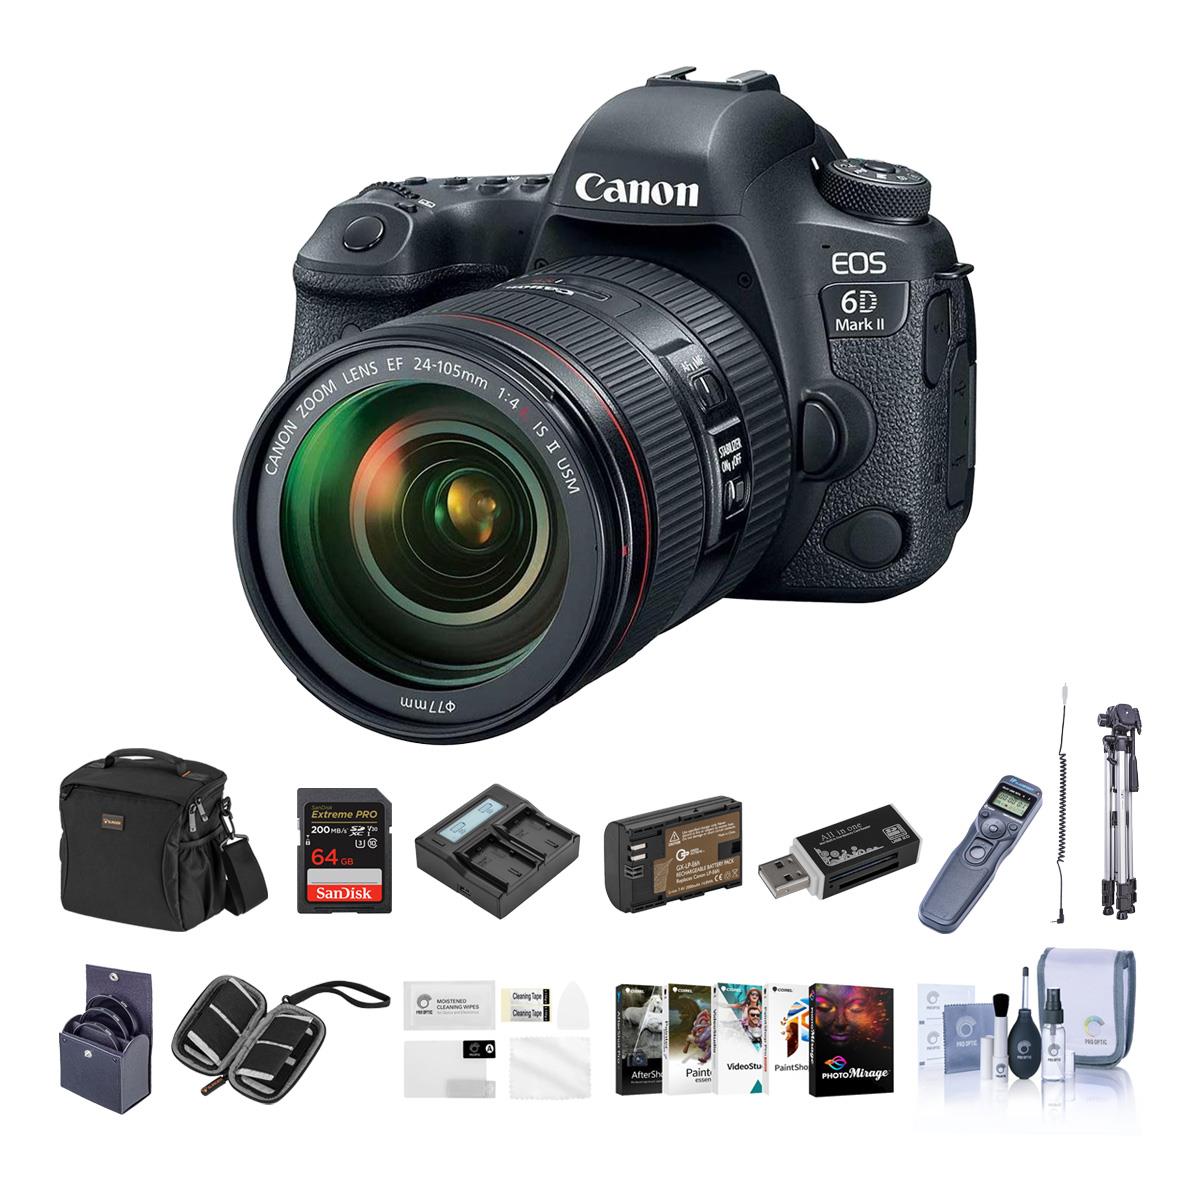 

Canon EOS 6D Mark II DSLR with EF 24-105mm f/4L IS II USM Lens W/ Premium Bundle